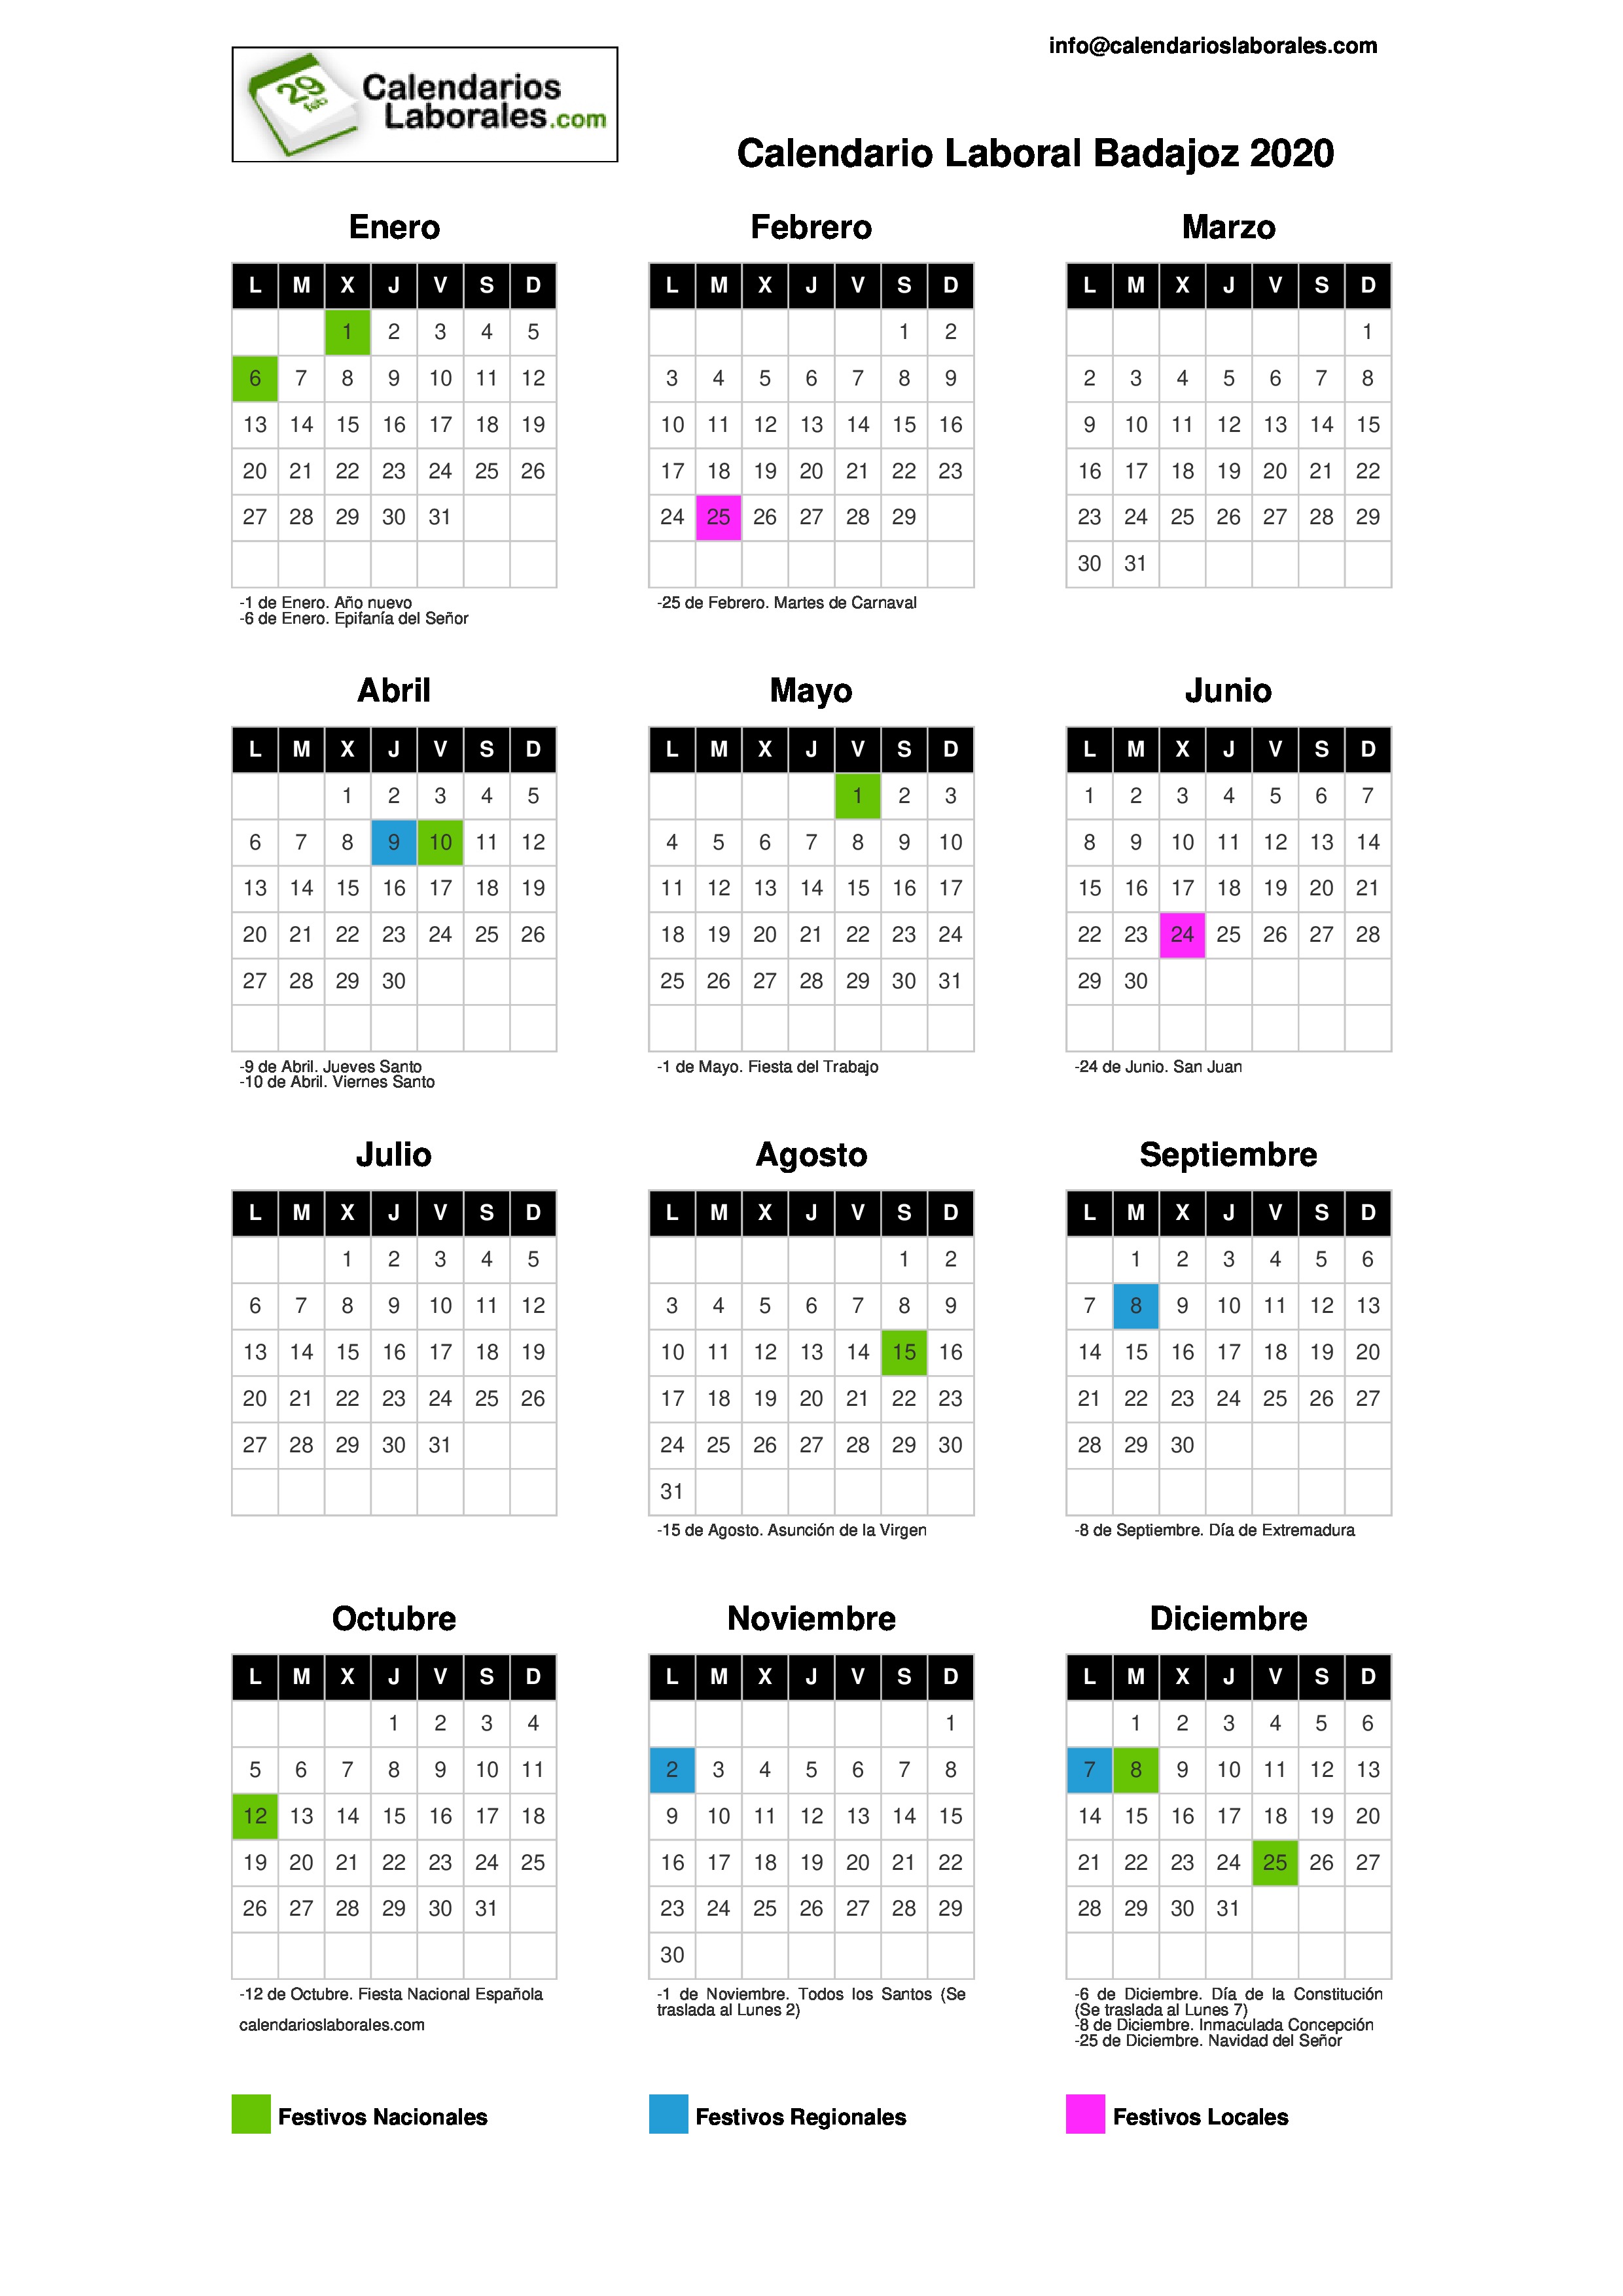 Calendario Laboral Badajoz 20202067 x 2923